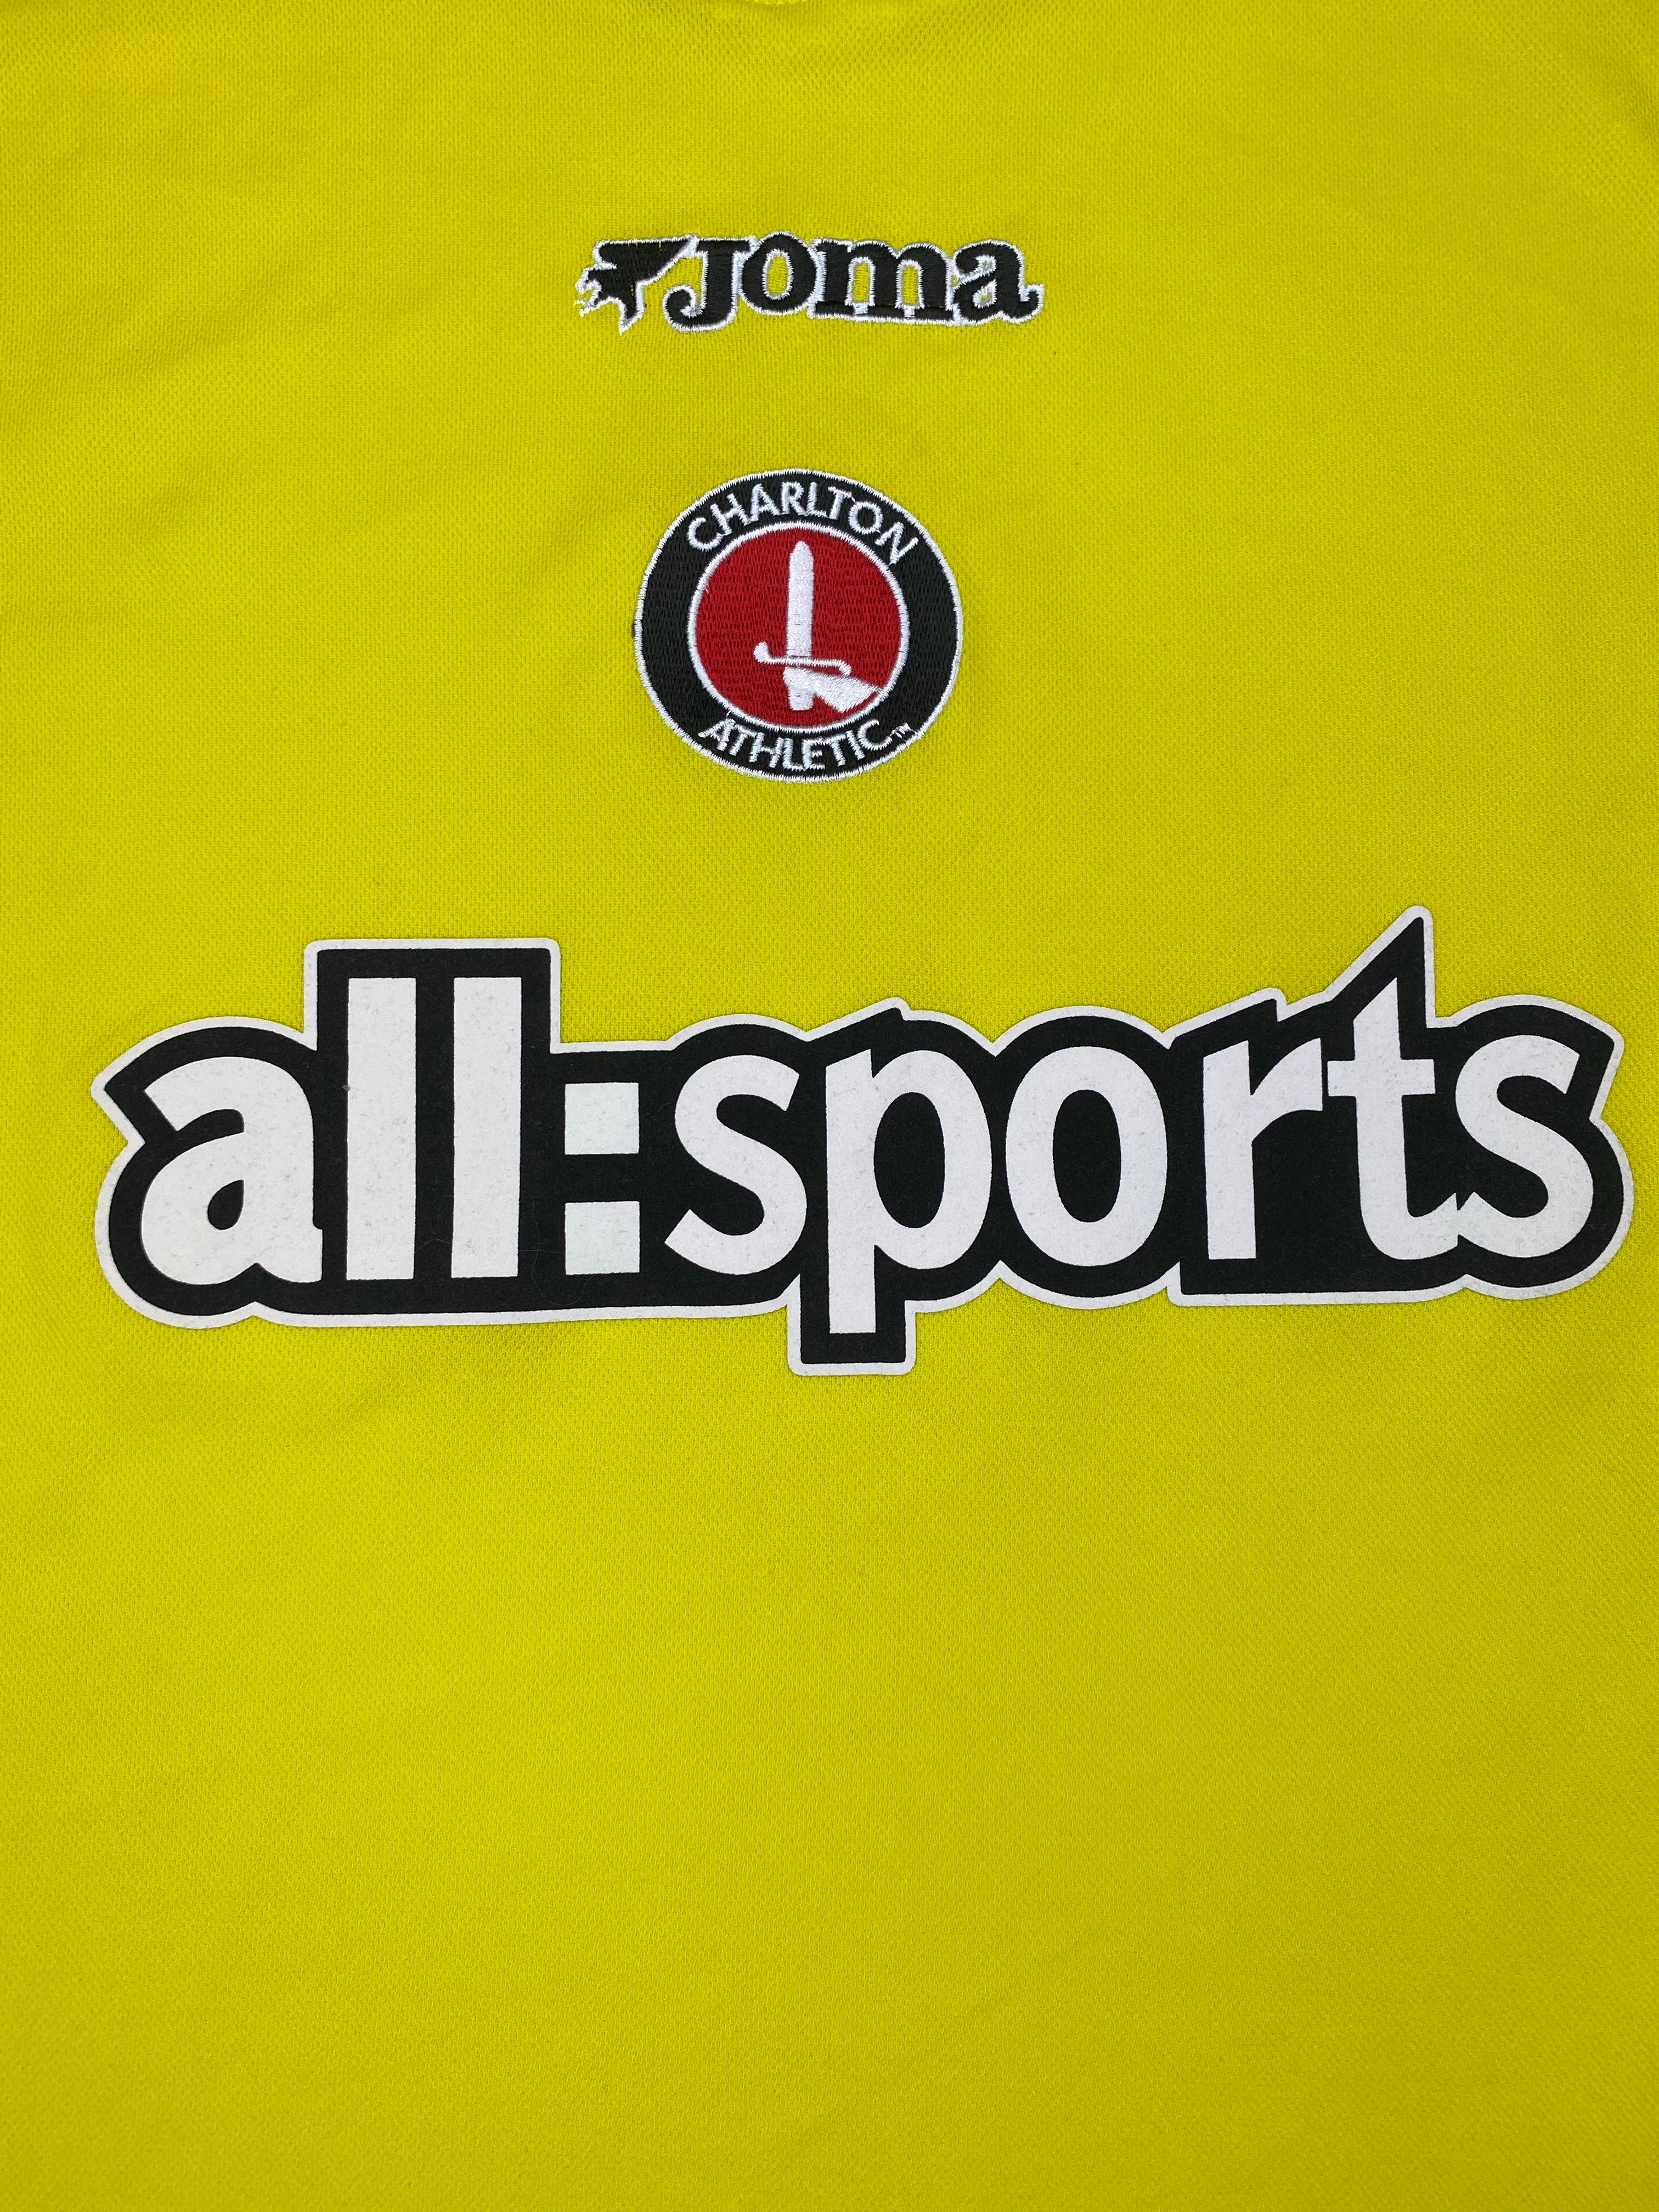 2003/05 Camiseta visitante del Charlton (XS) 9/10